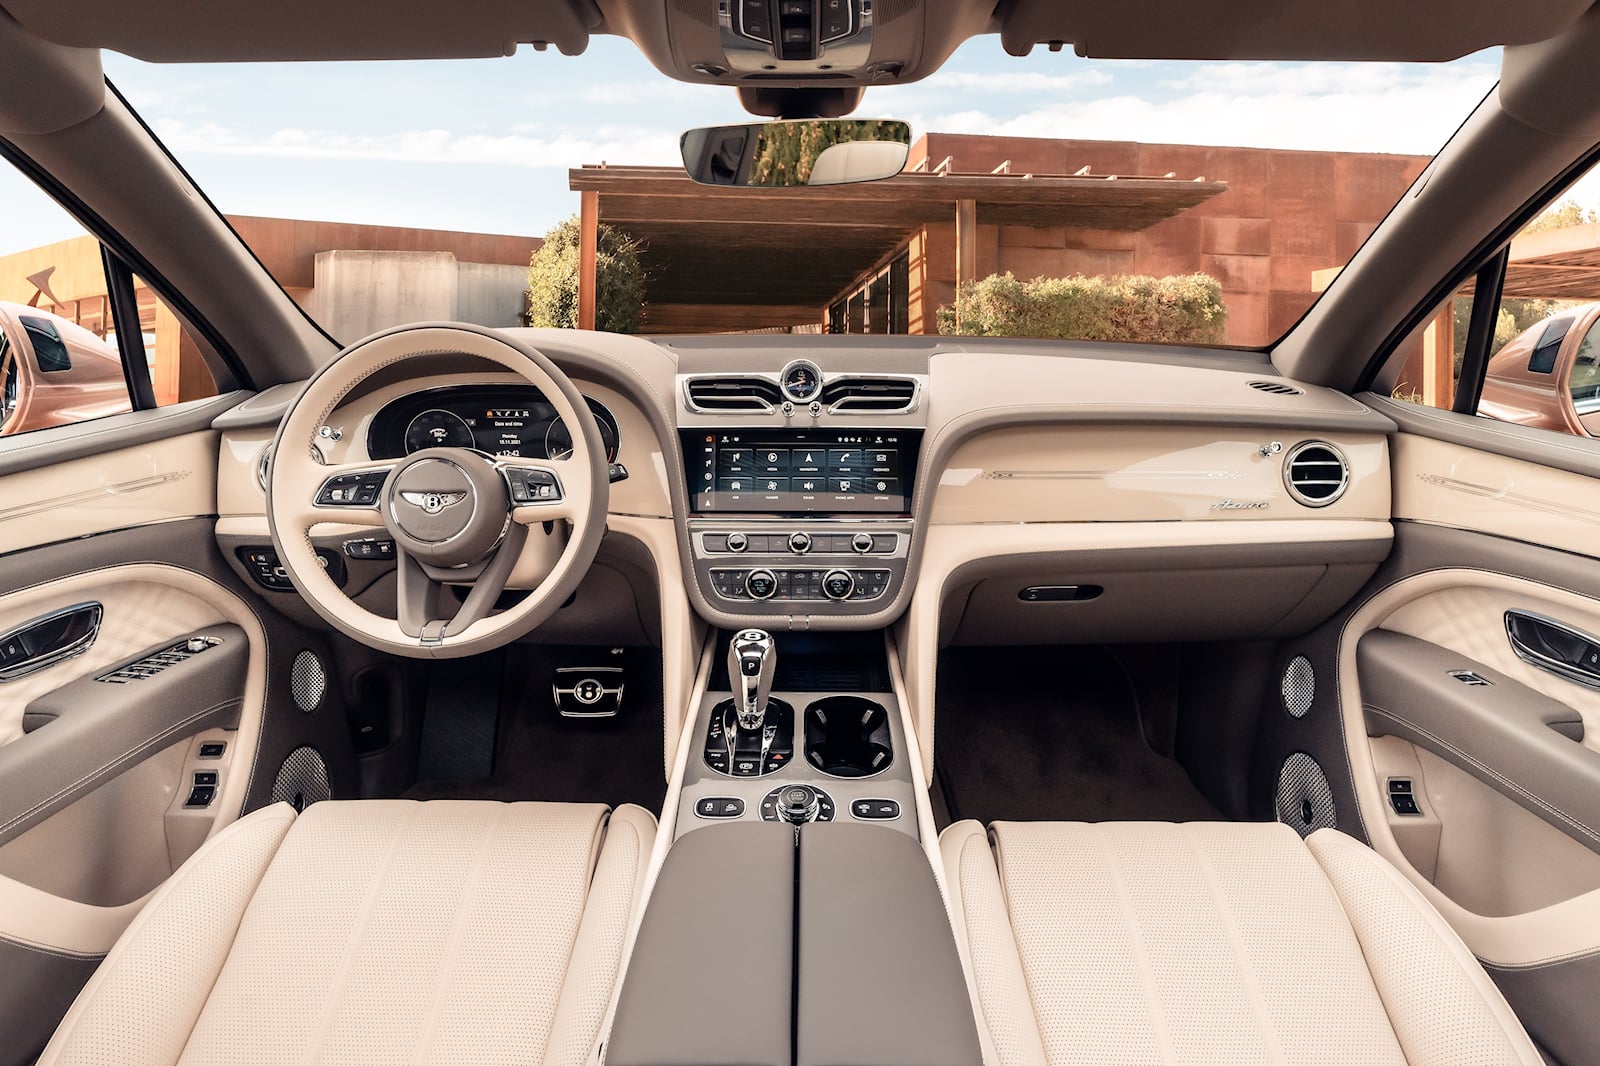 2023 Bentley Bentayga Dashboard Carbuzz 992927 1600 